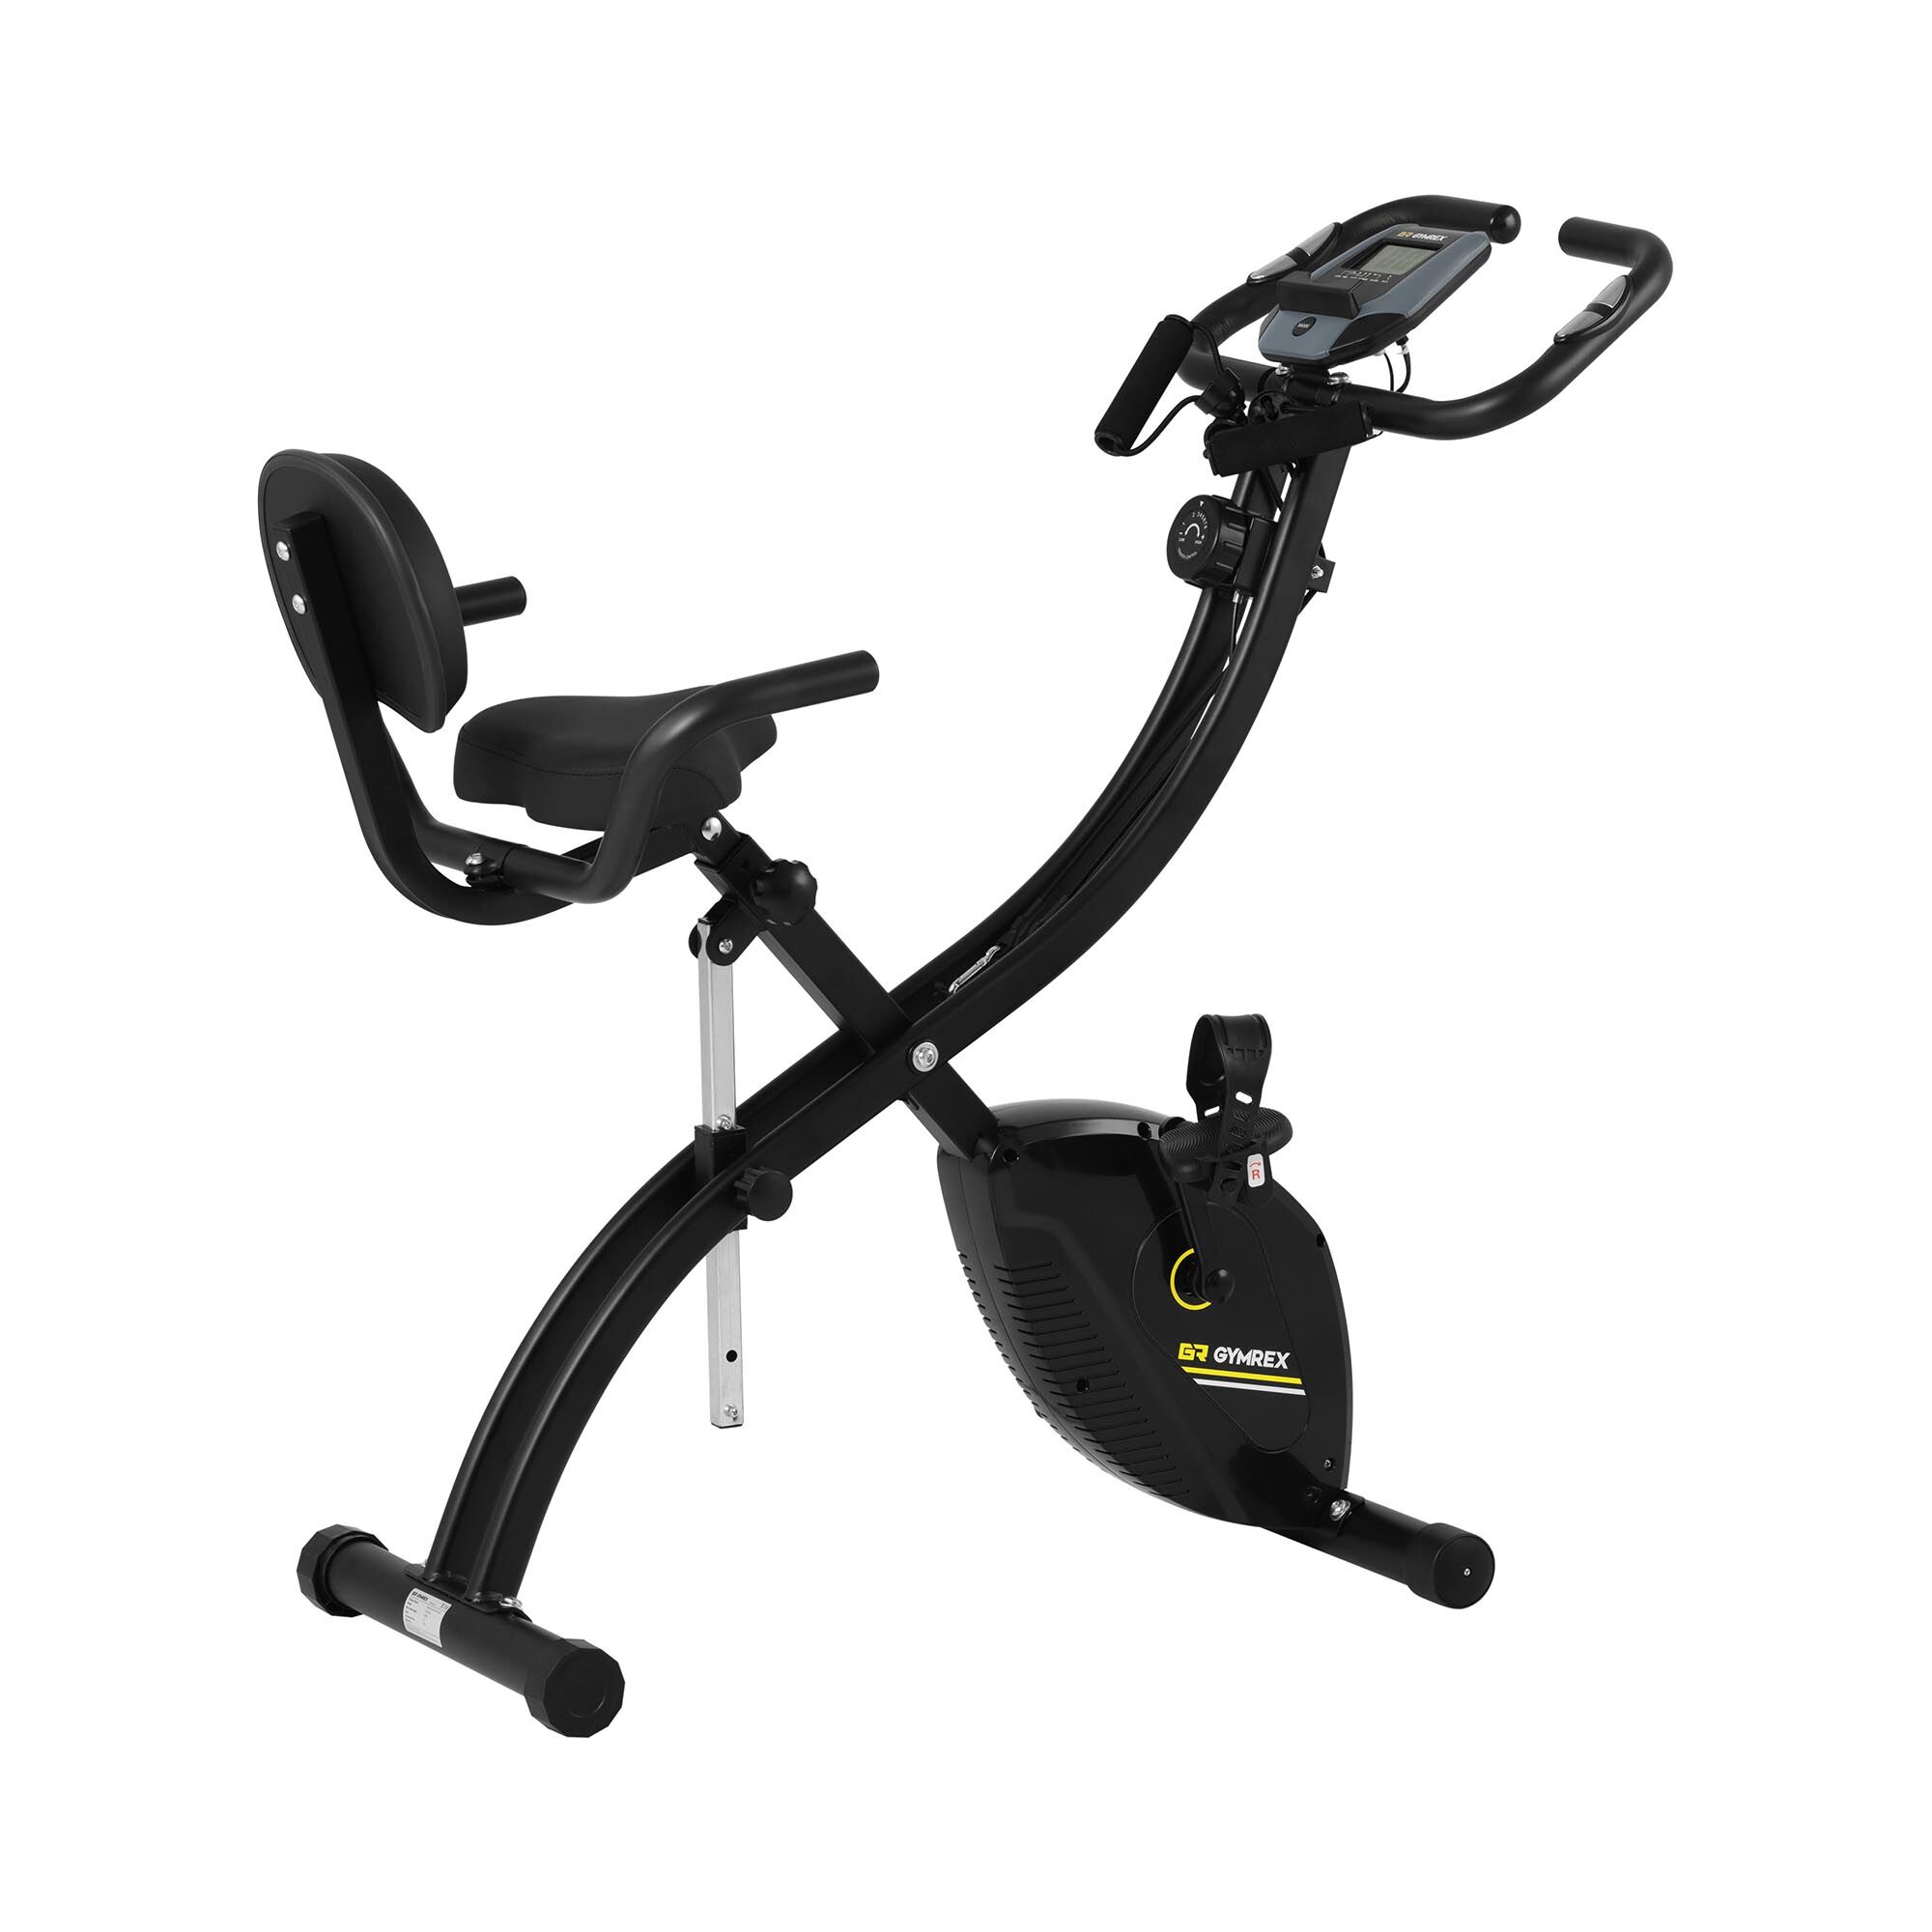 Gymrex Stationary Bike - folding - backrest - extra handles - black